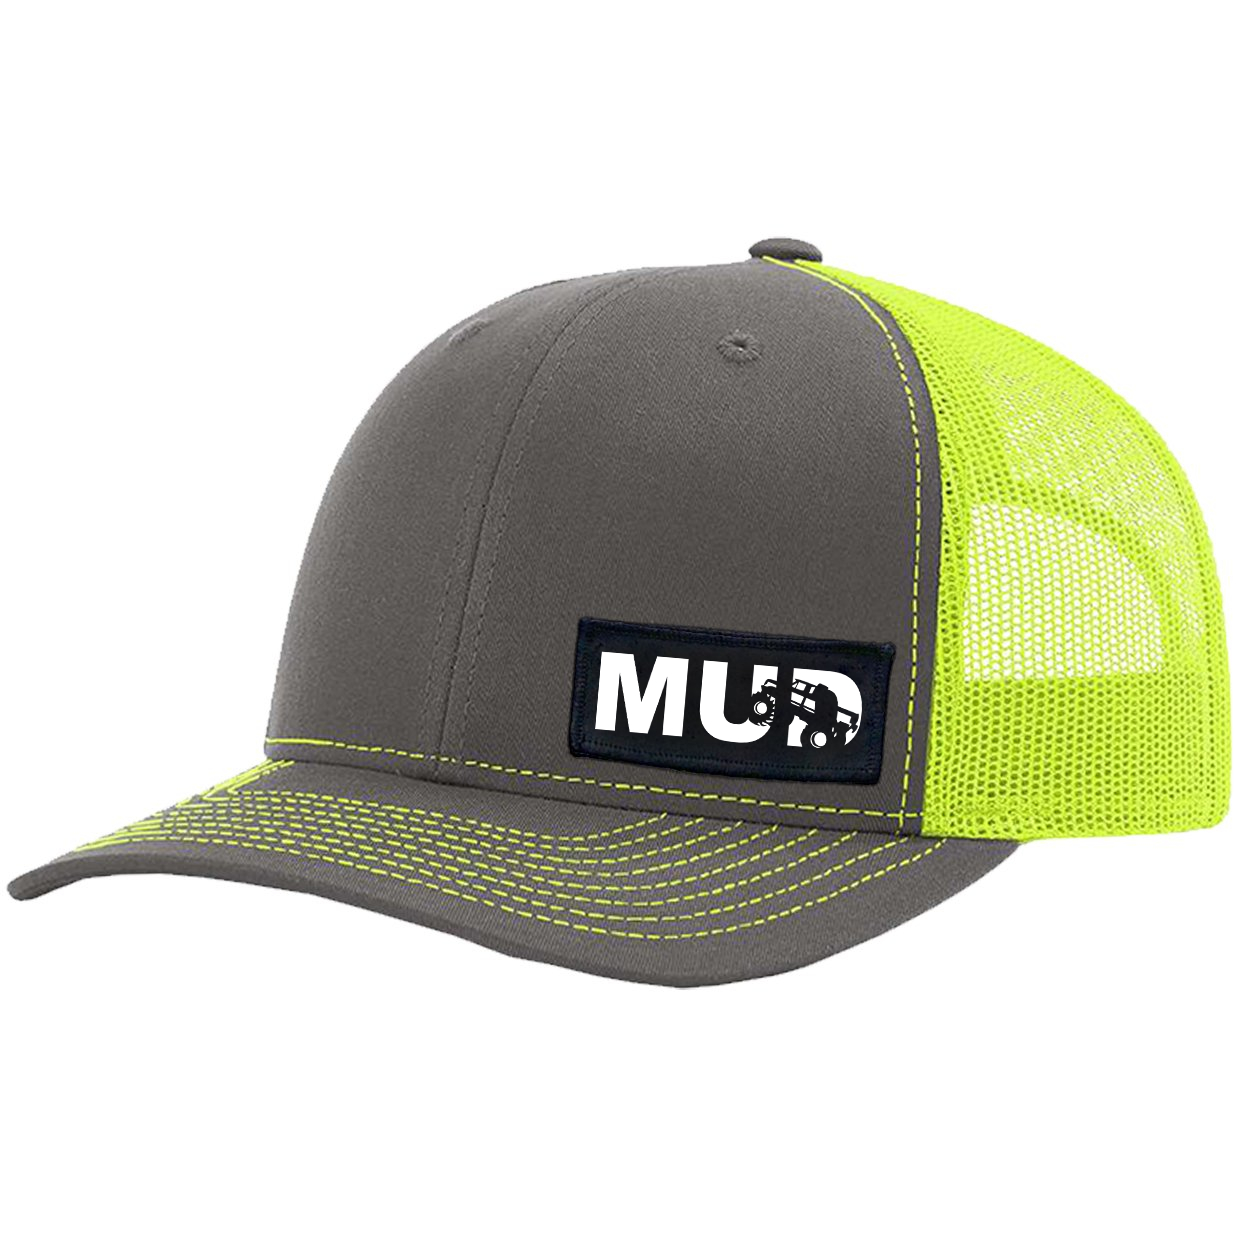 Mud Truck Logo Night Out Woven Patch Snapback Trucker Hat Gray/Neon Yellow (White Logo)